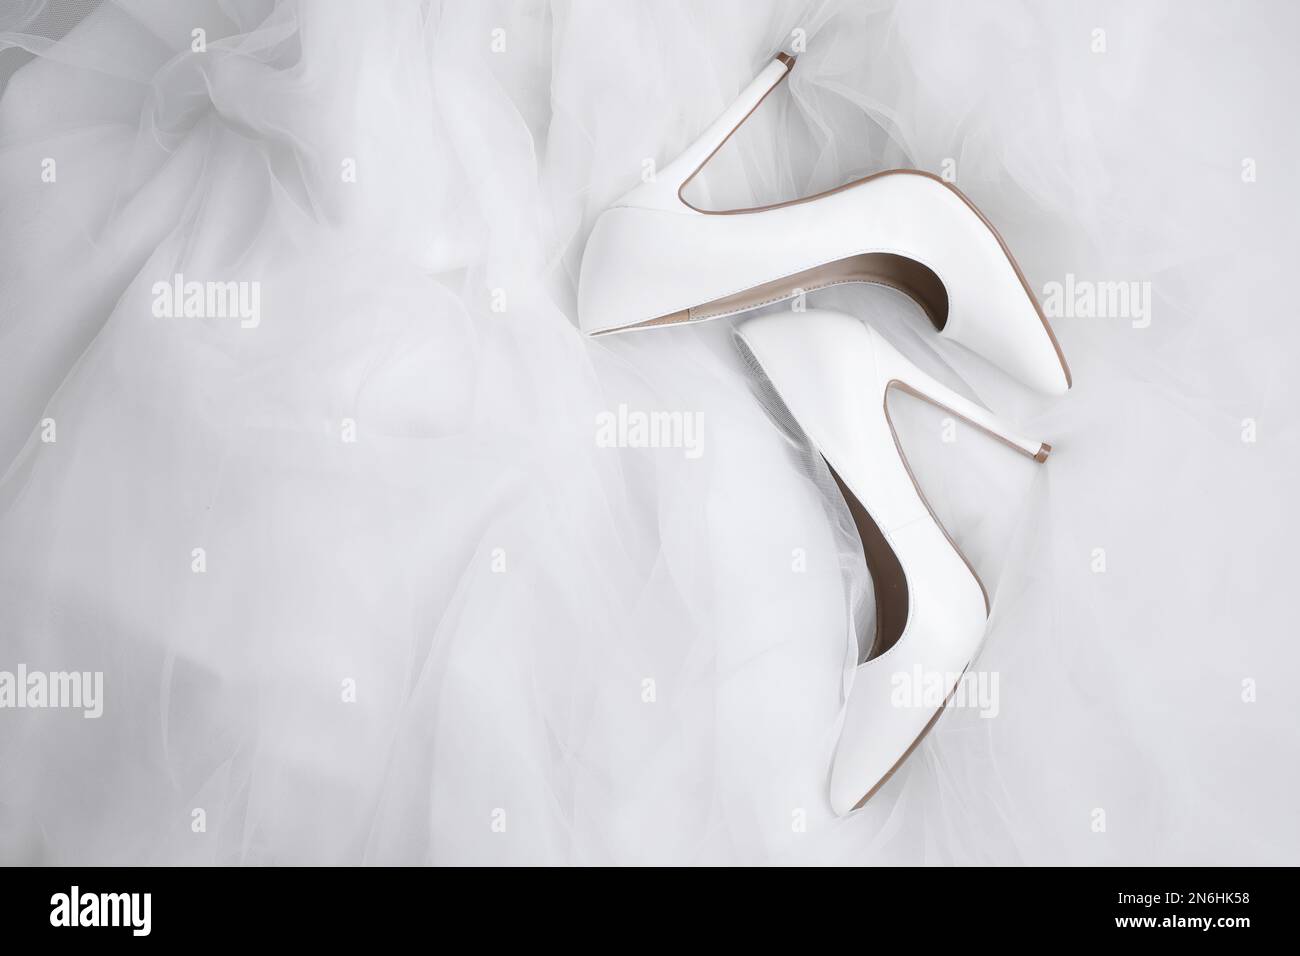 Pair of wedding high heel shoes on white veil, flat lay Stock Photo